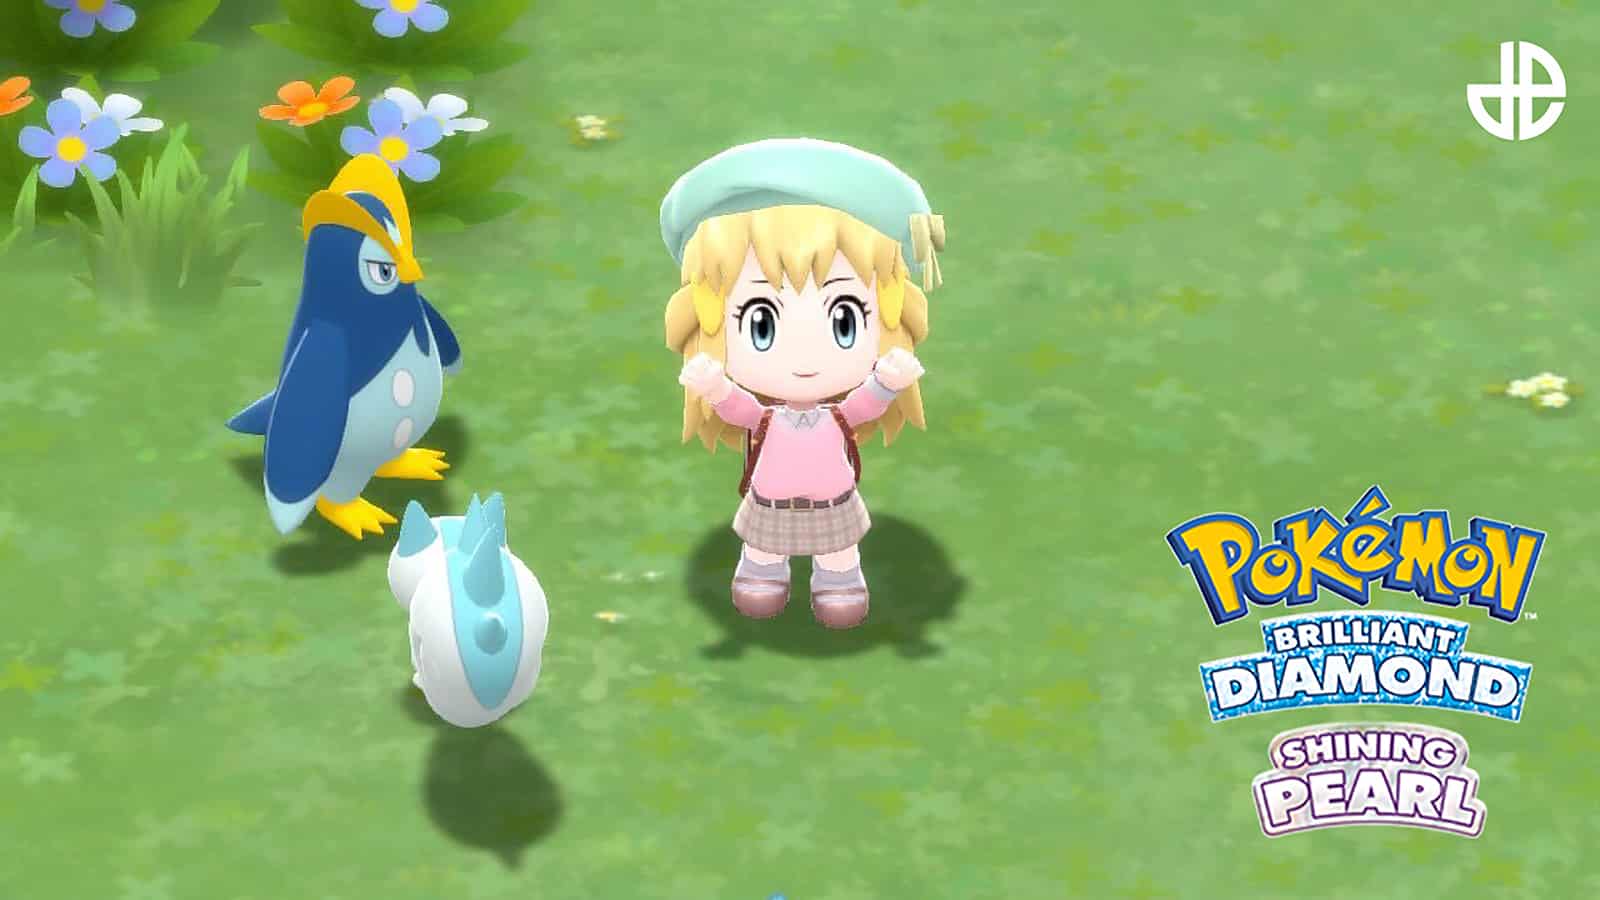 Pokémon Brilliant Diamond and Shining Pearl Will Let Your Pokémon